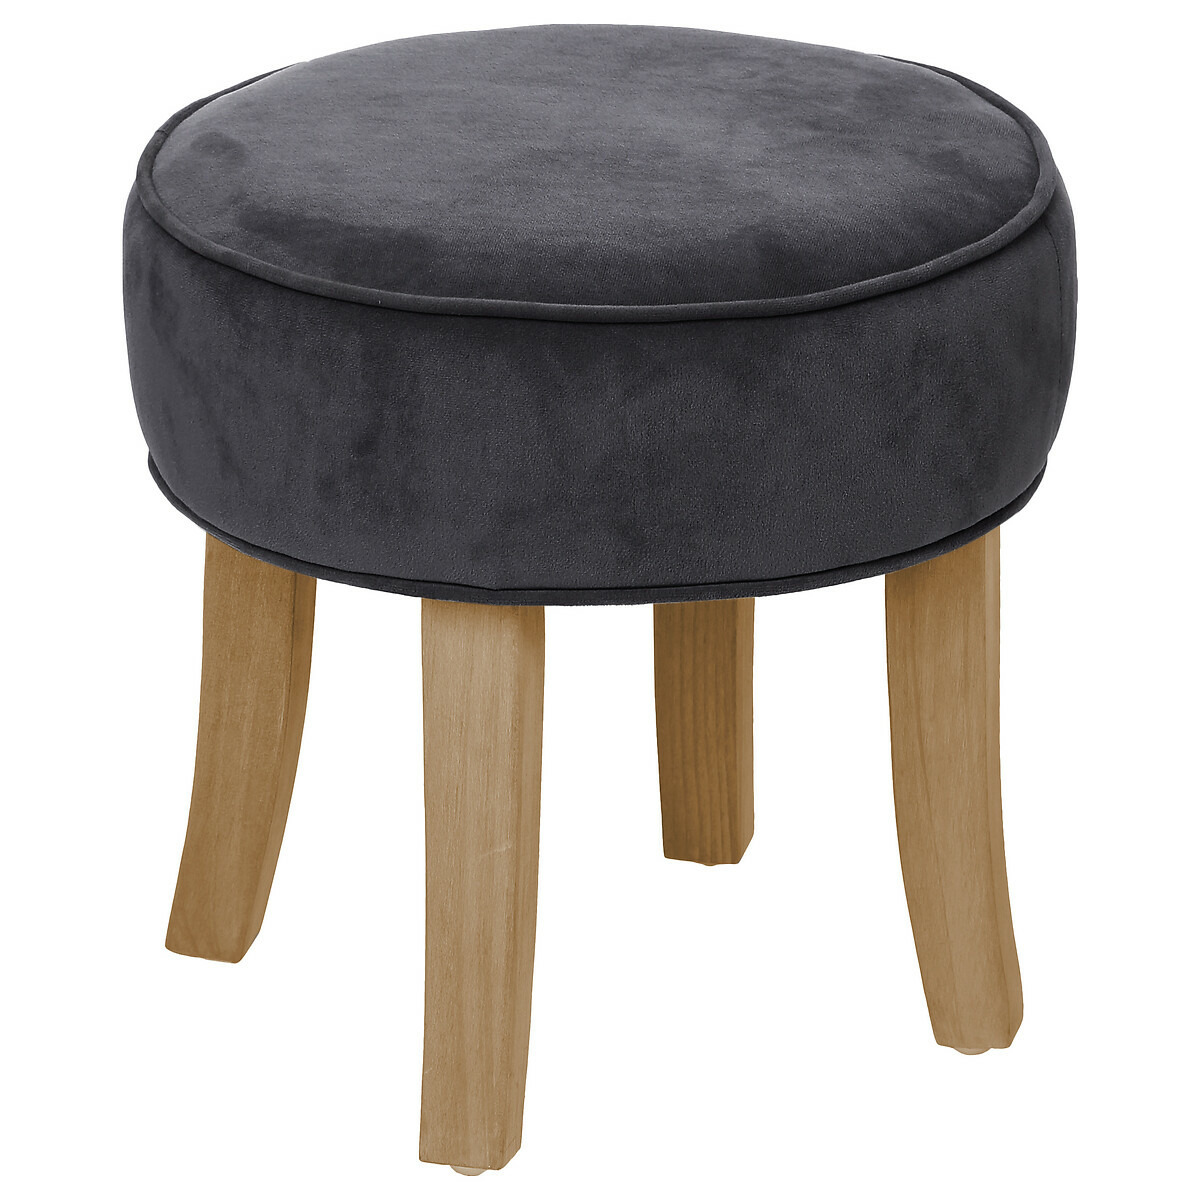 Zit krukje-bijzet stoel hout-stof grijs fluweel D35 x H40 cm